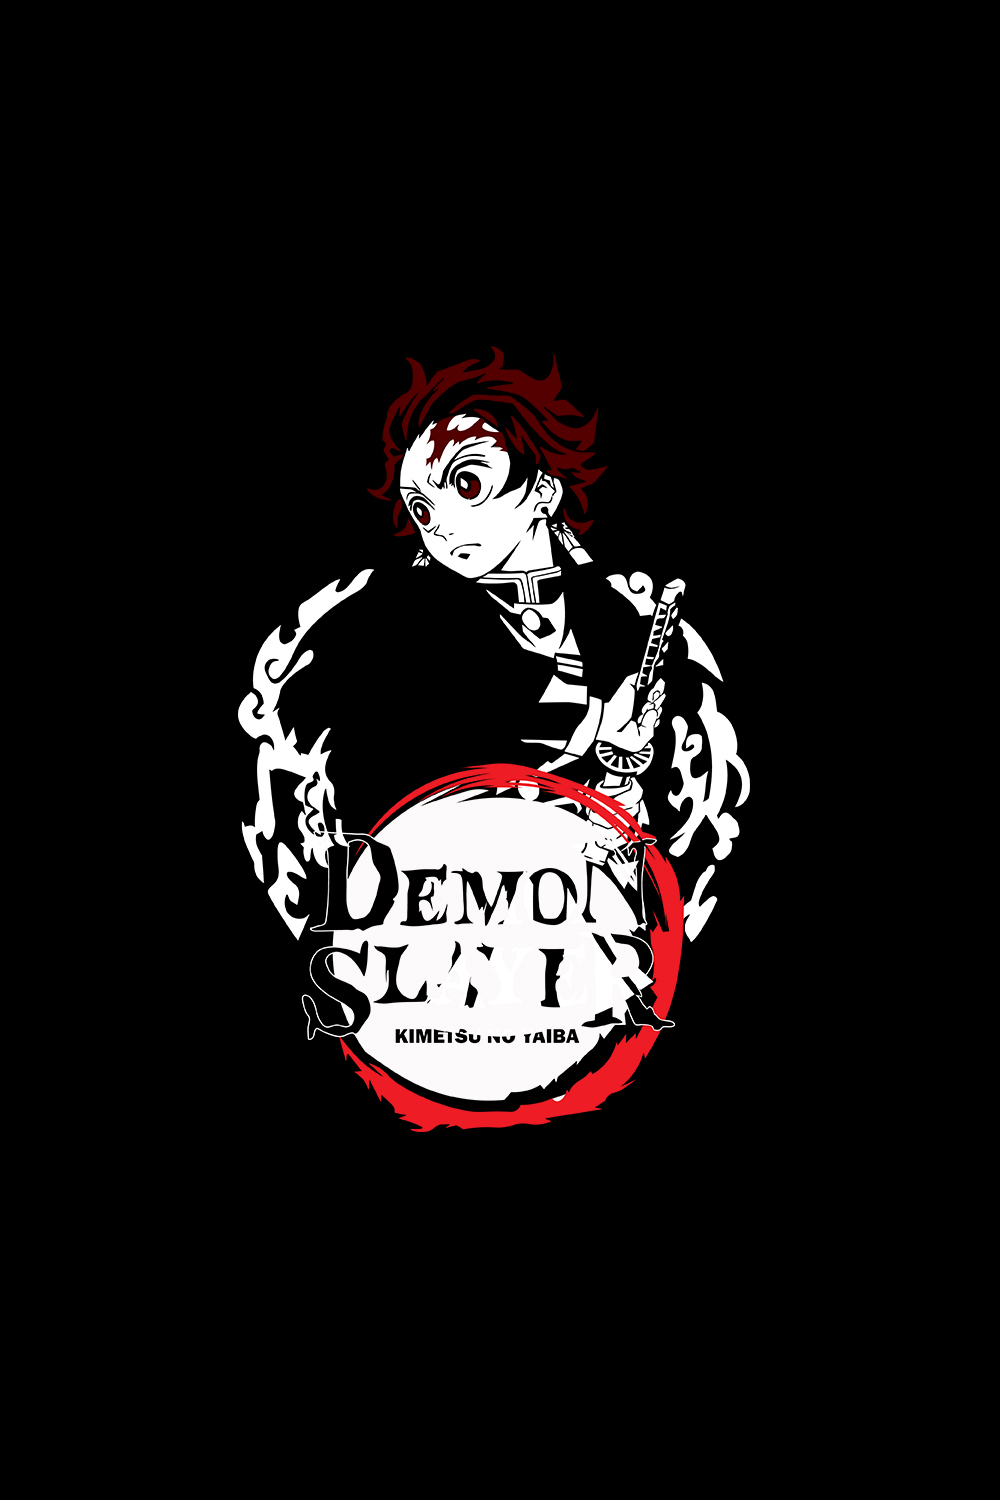 Demon Slayer Kimetsu no Yaiba tshirt design pinterest preview image.